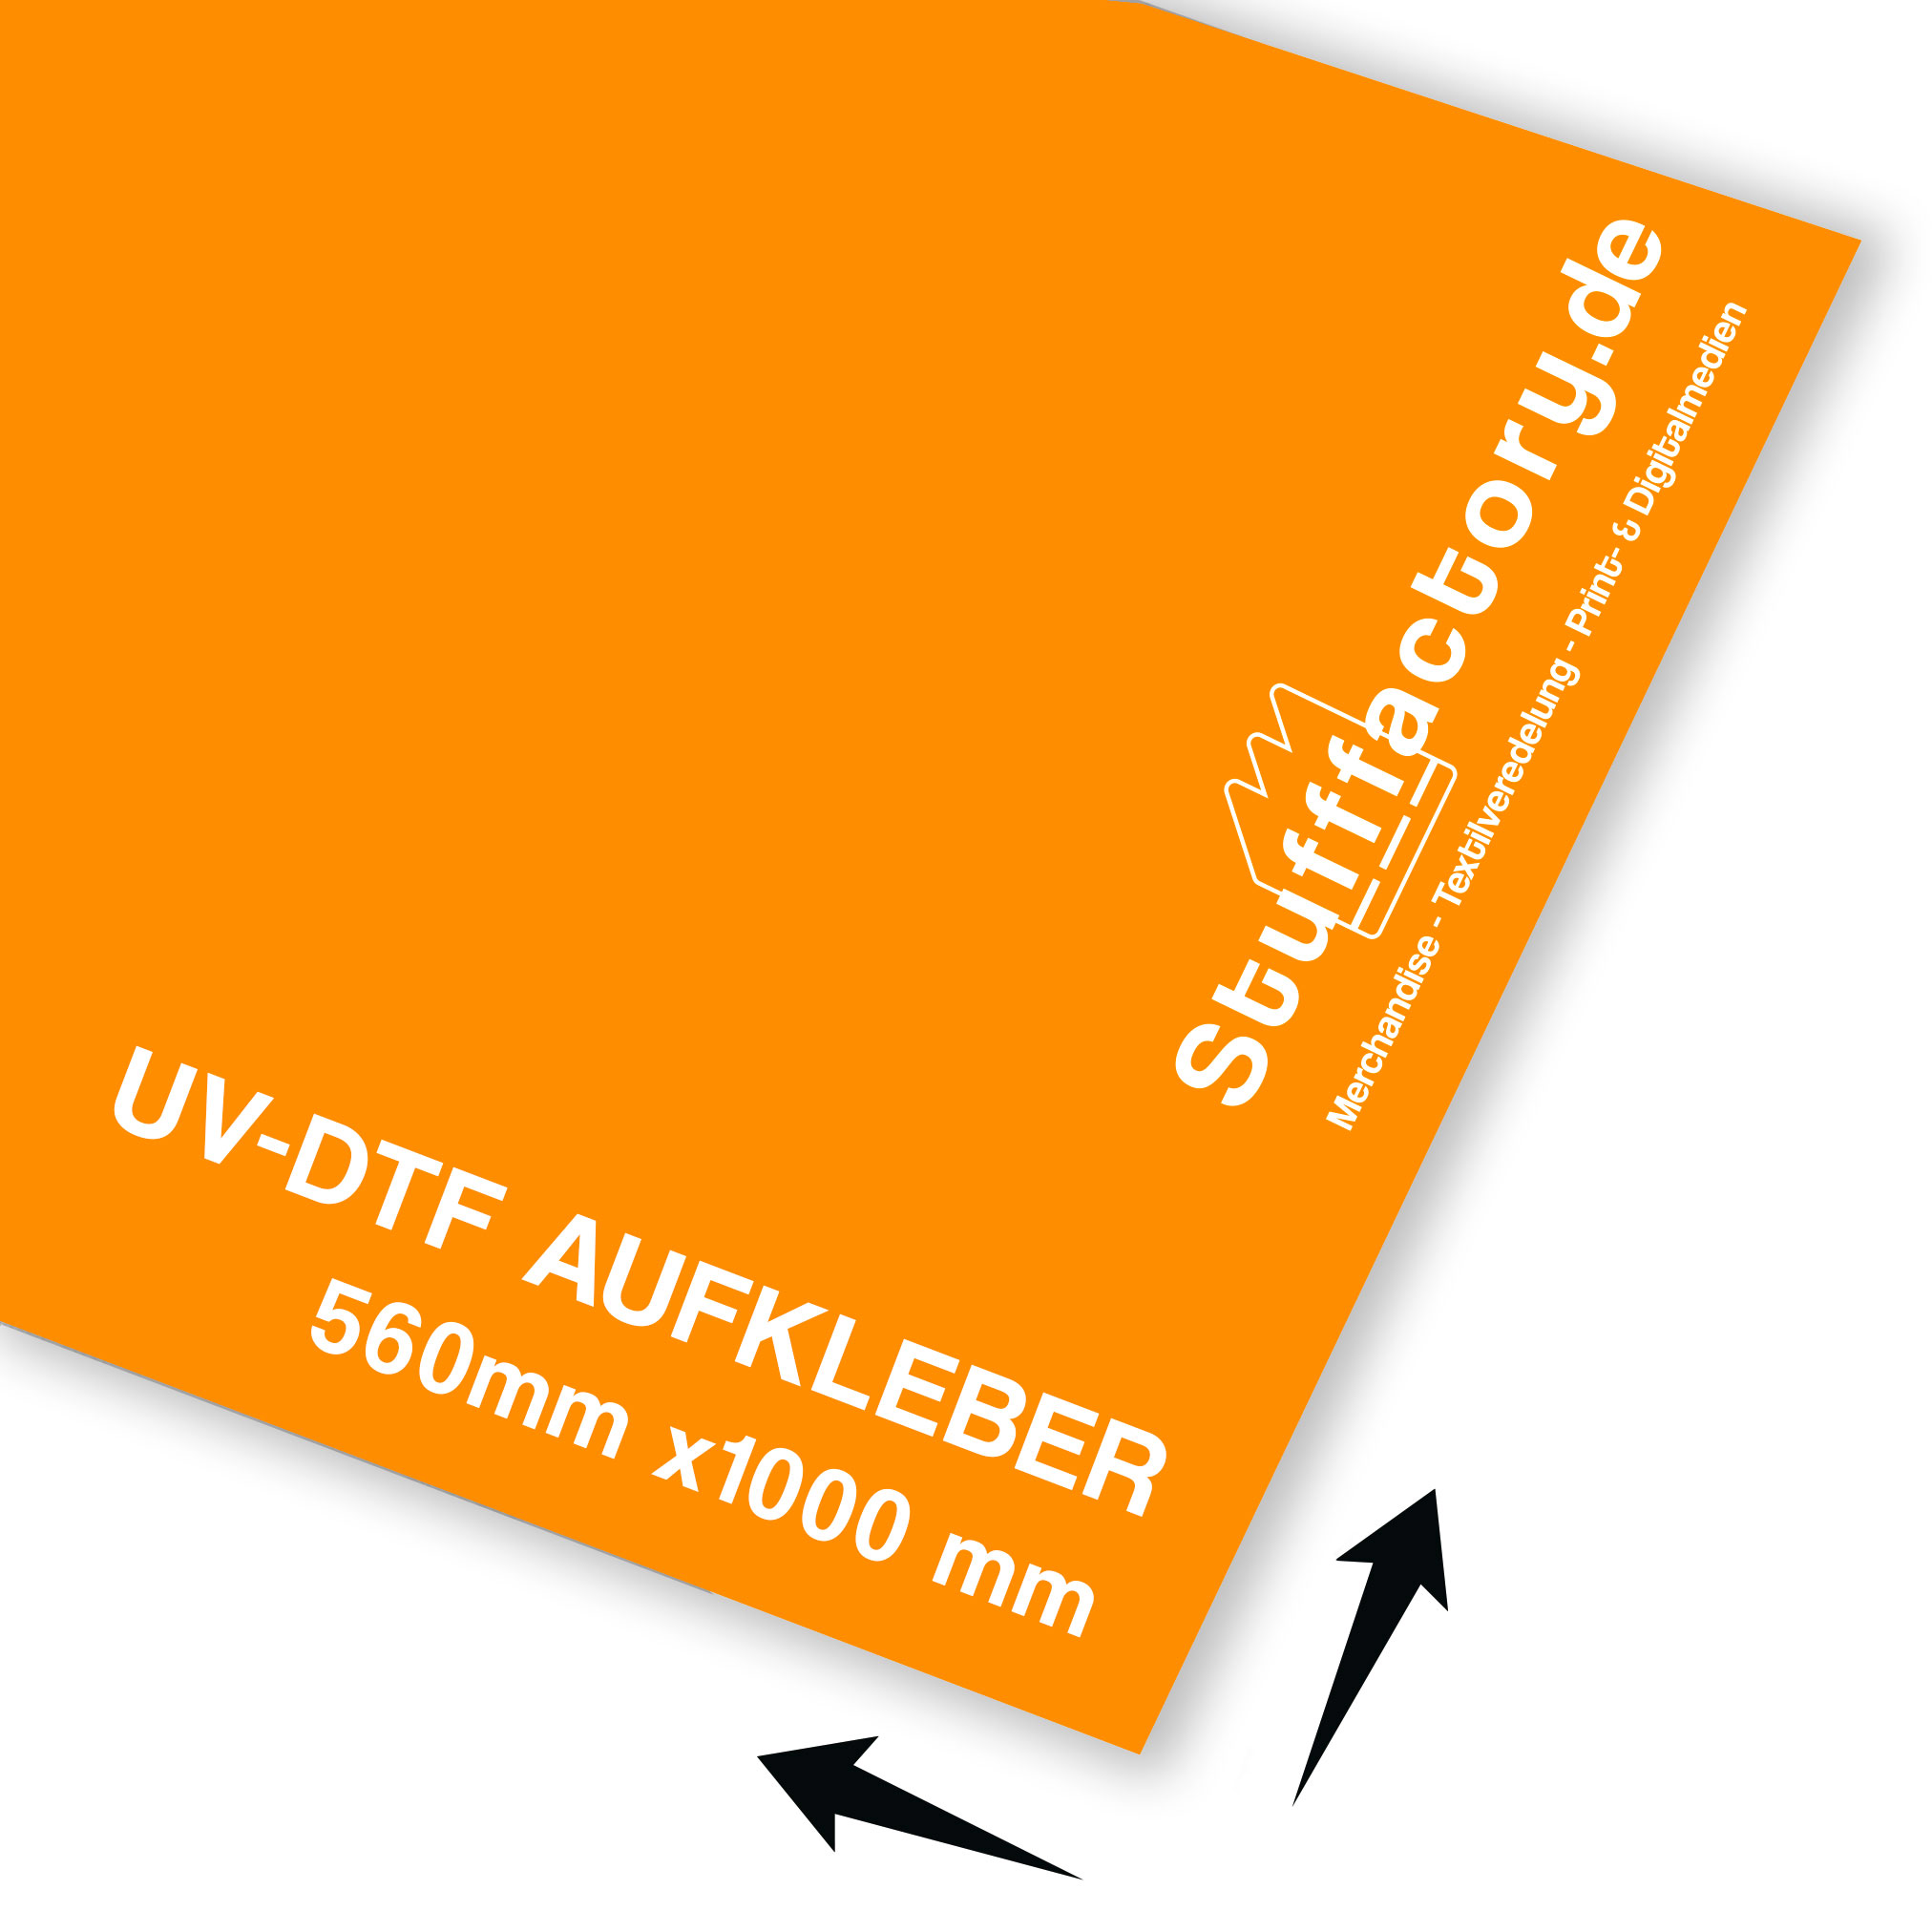 UV-DTF Transfer 560 x 1000 mm - Aufkleber